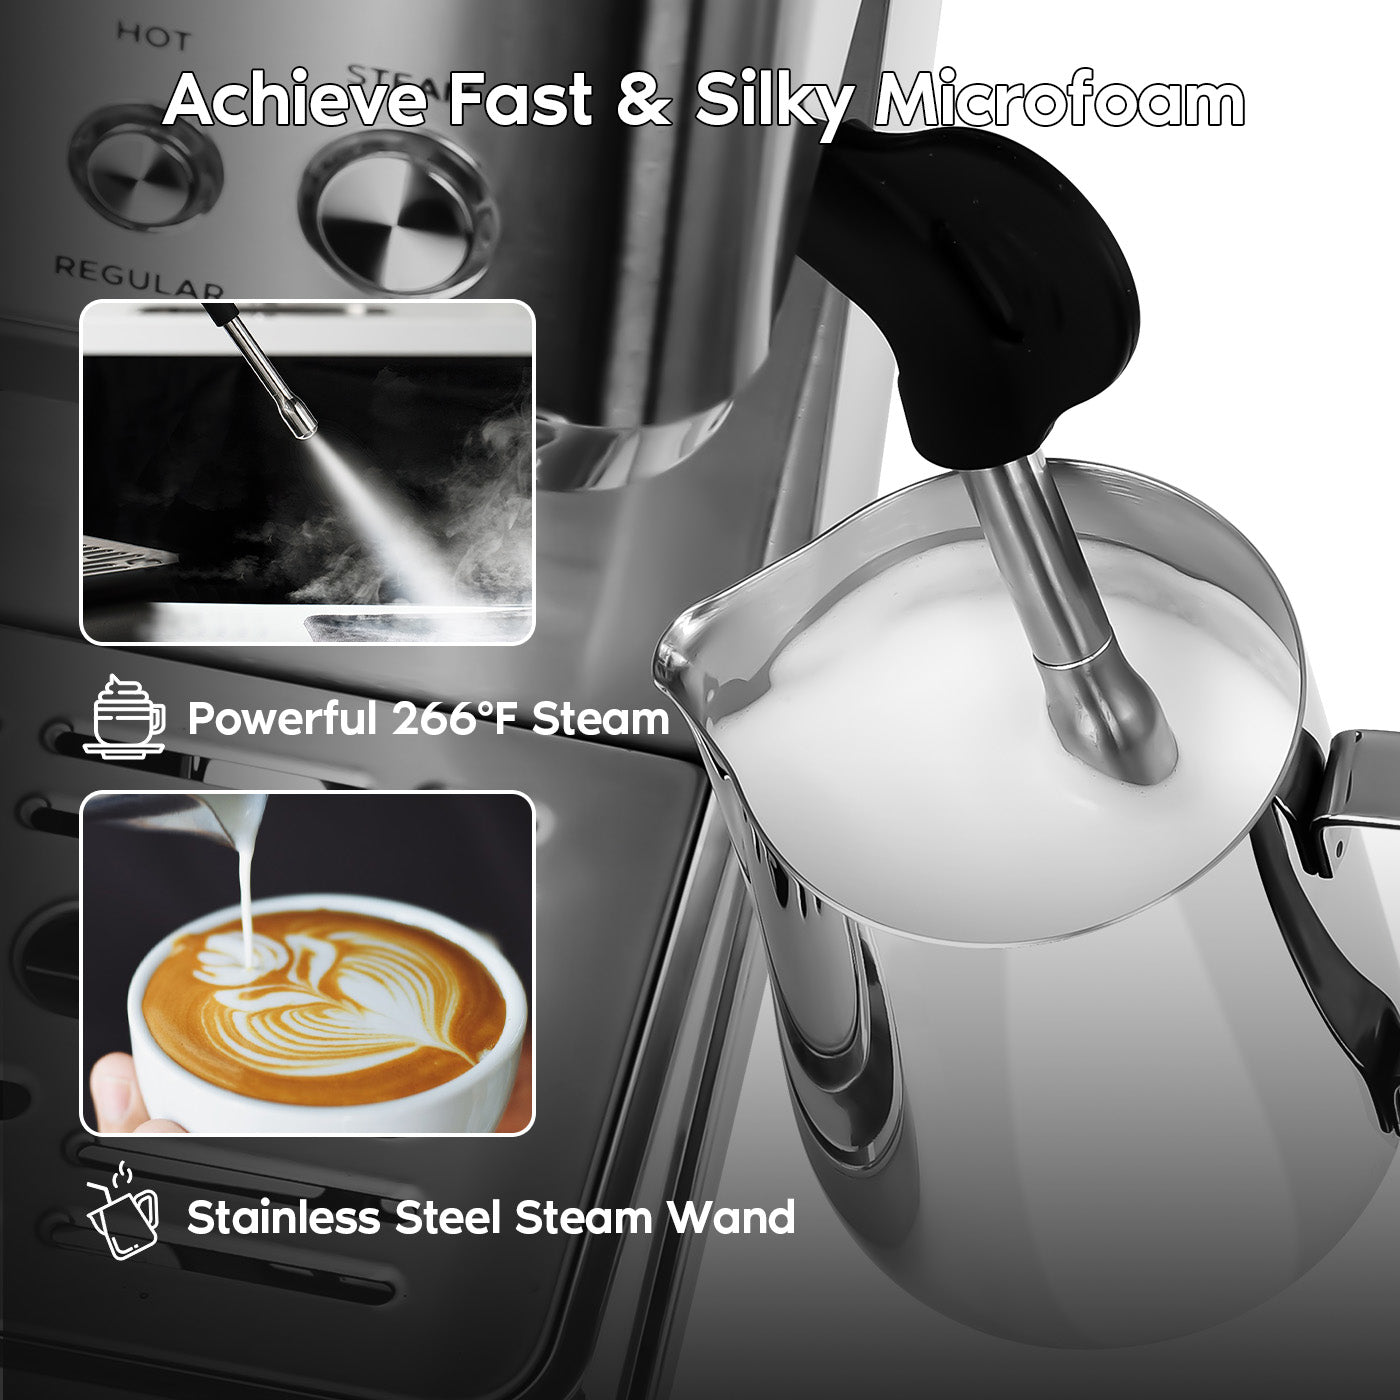 CASABREWS 3700GENSE 20-Bar Espresso Coffee Machine with Powerful Steam Wand